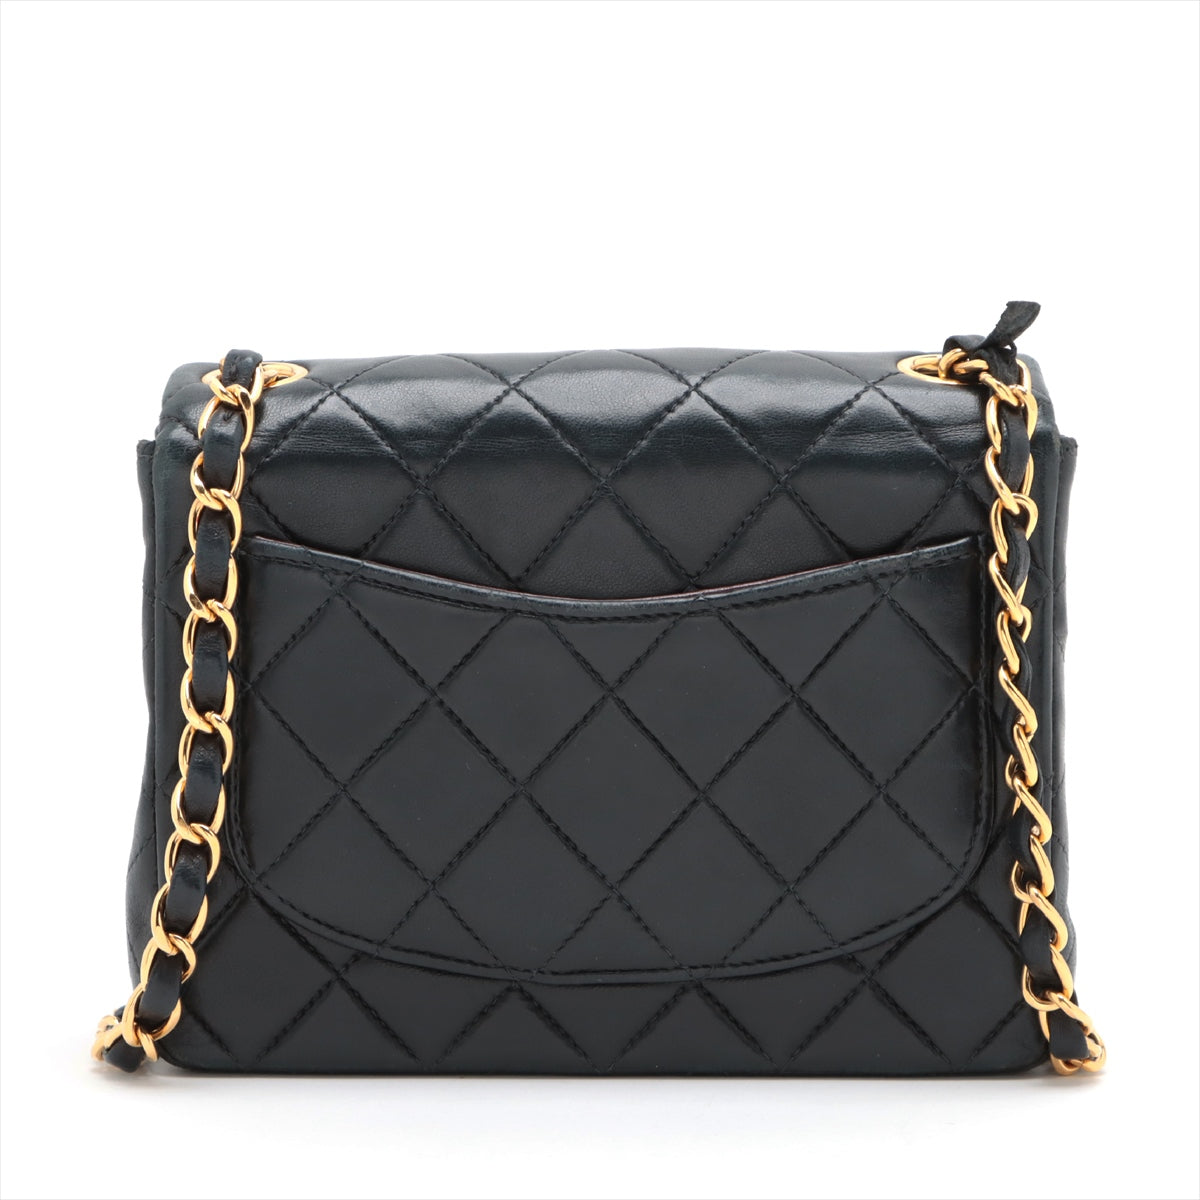 Chanel Mini Matrasse  Single Flap Single Chain Bag Navy G  6th